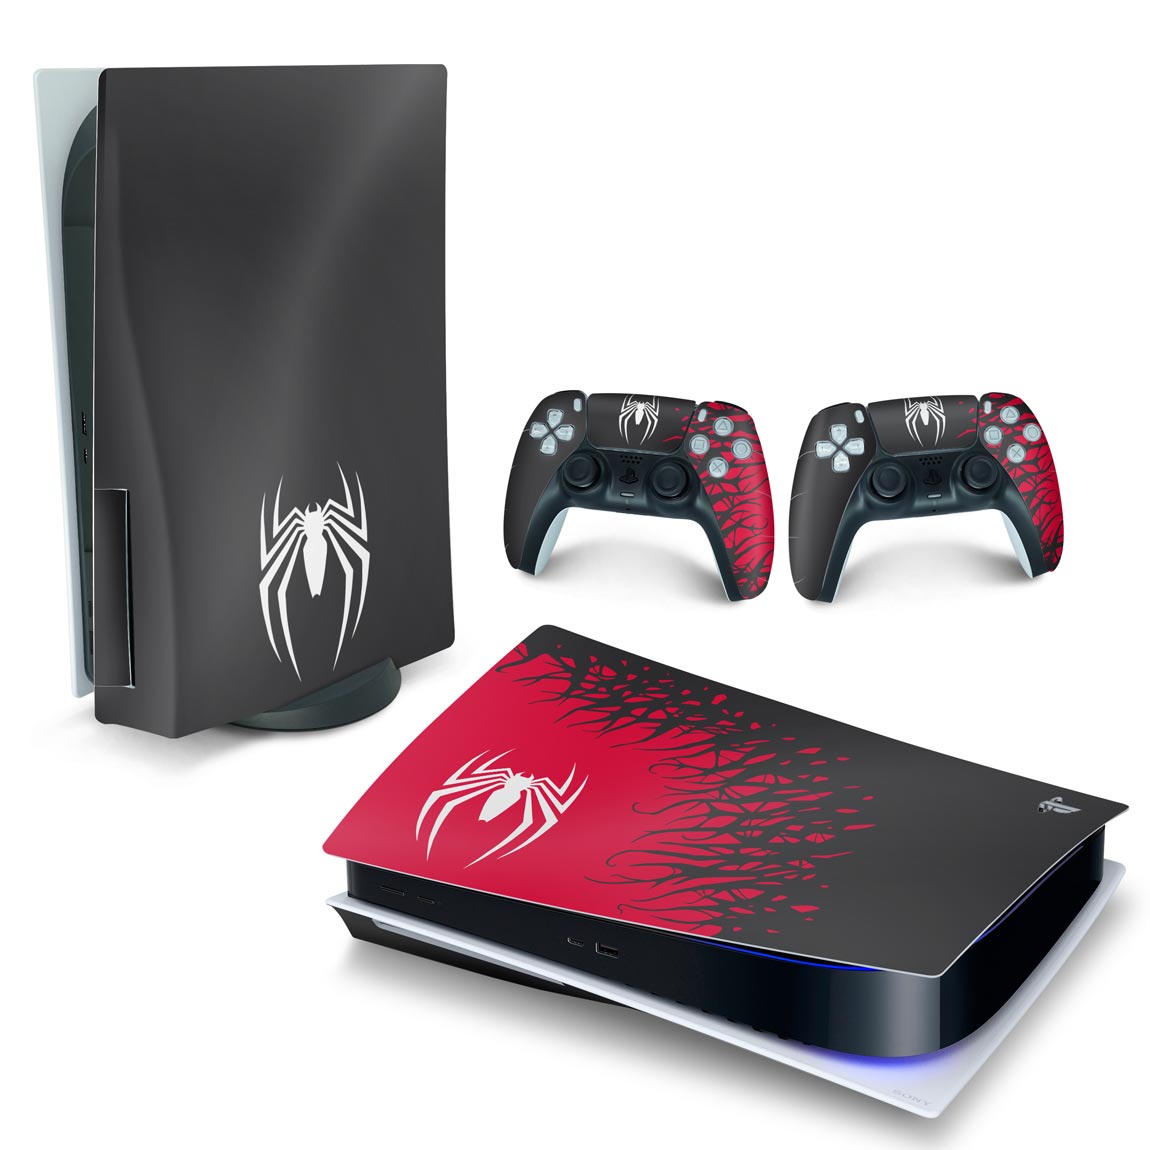 PS4 Slim Skin - Spider-Man Homem Aranha 2 Edition - Pop Arte Skins